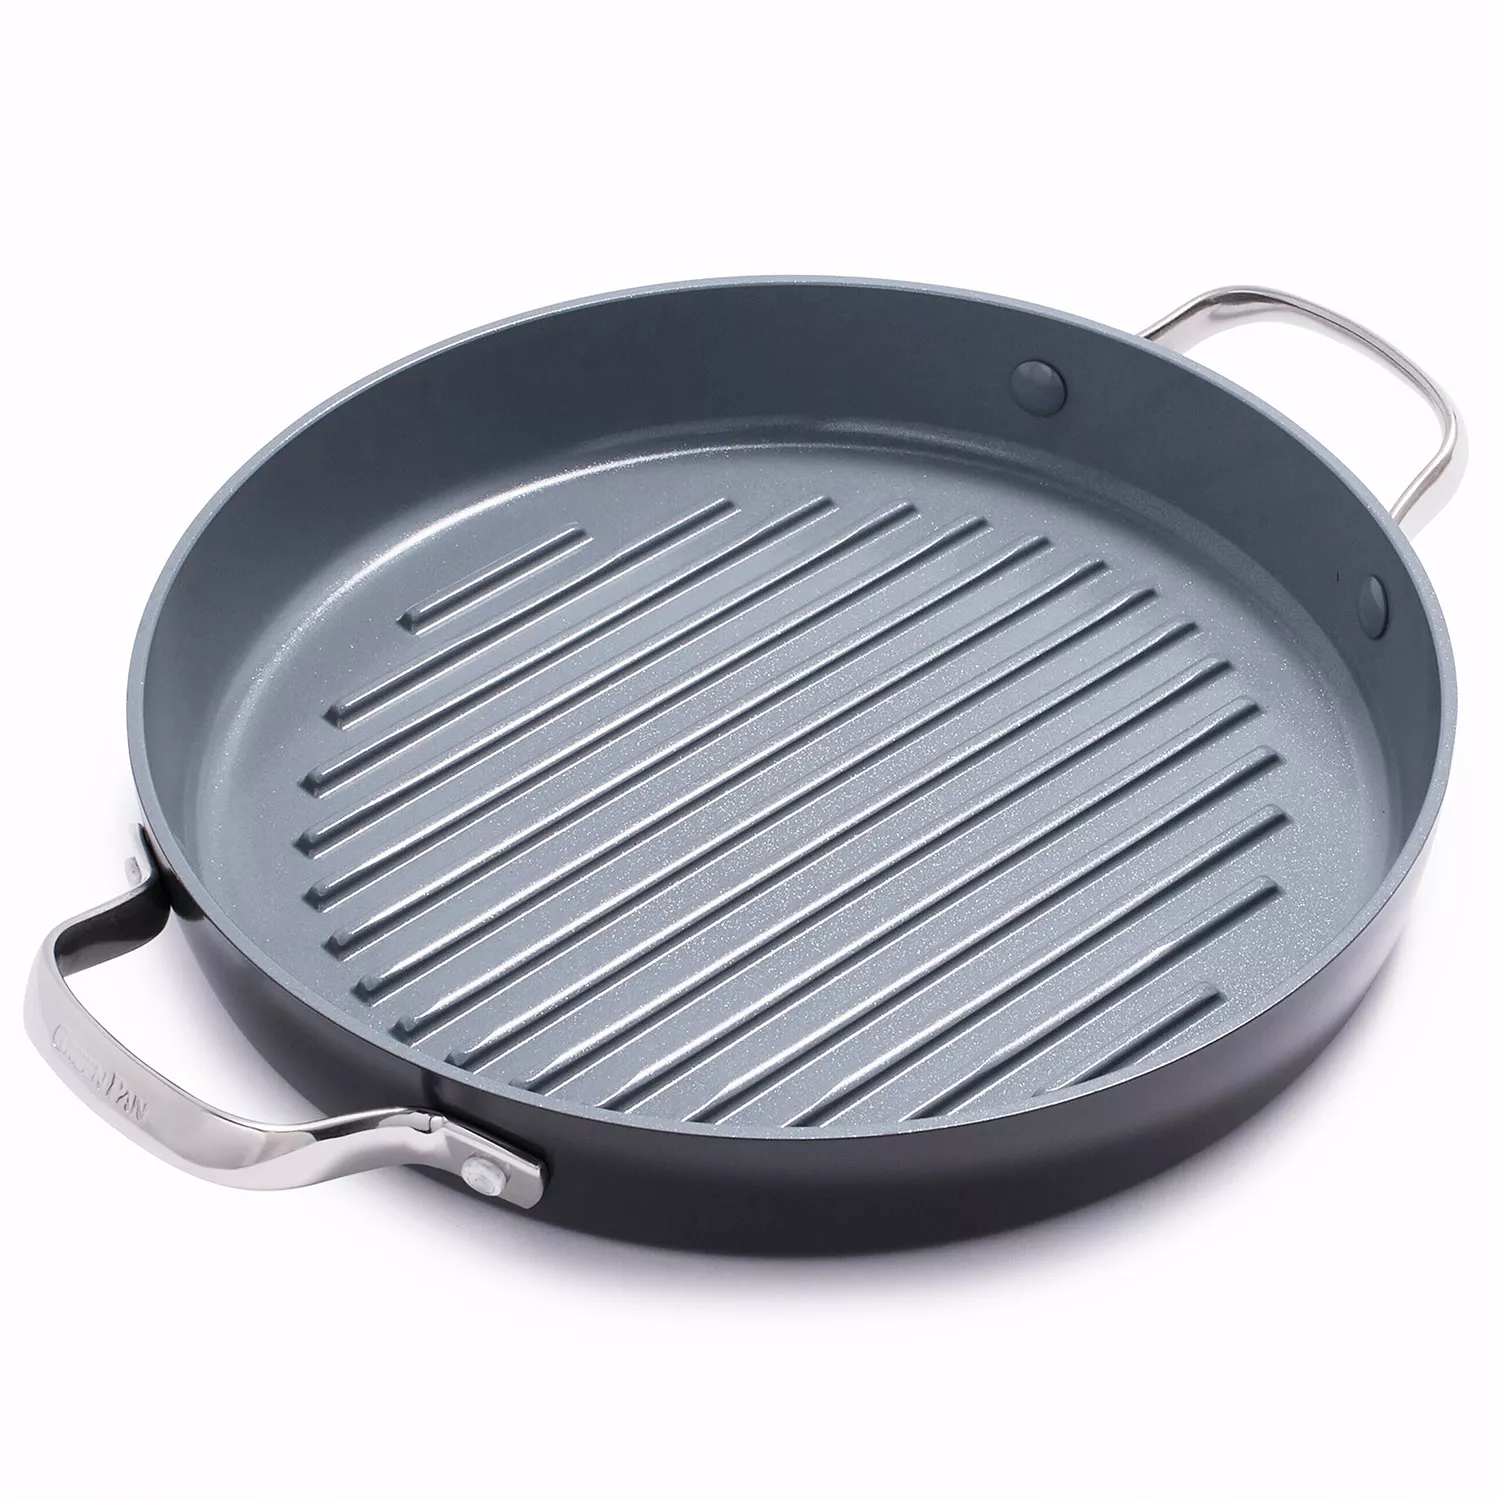 frying pan, ceramic & hard anodized 12 VALENCIA PRO WAIT - Whisk